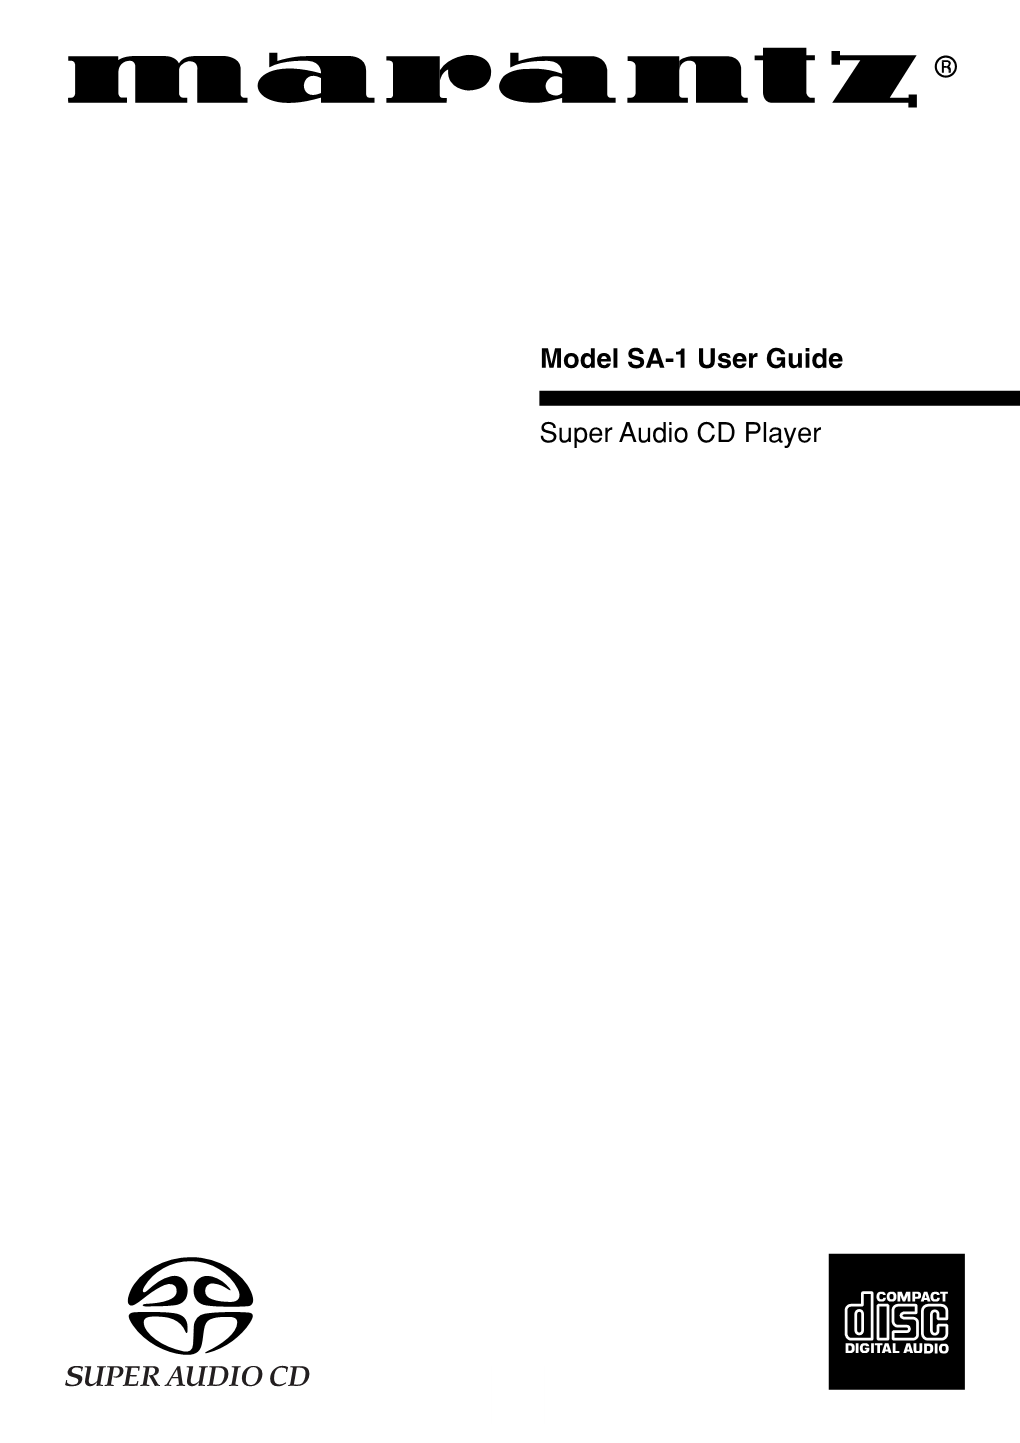 Model SA-1 User Guide Super Audio CD Player